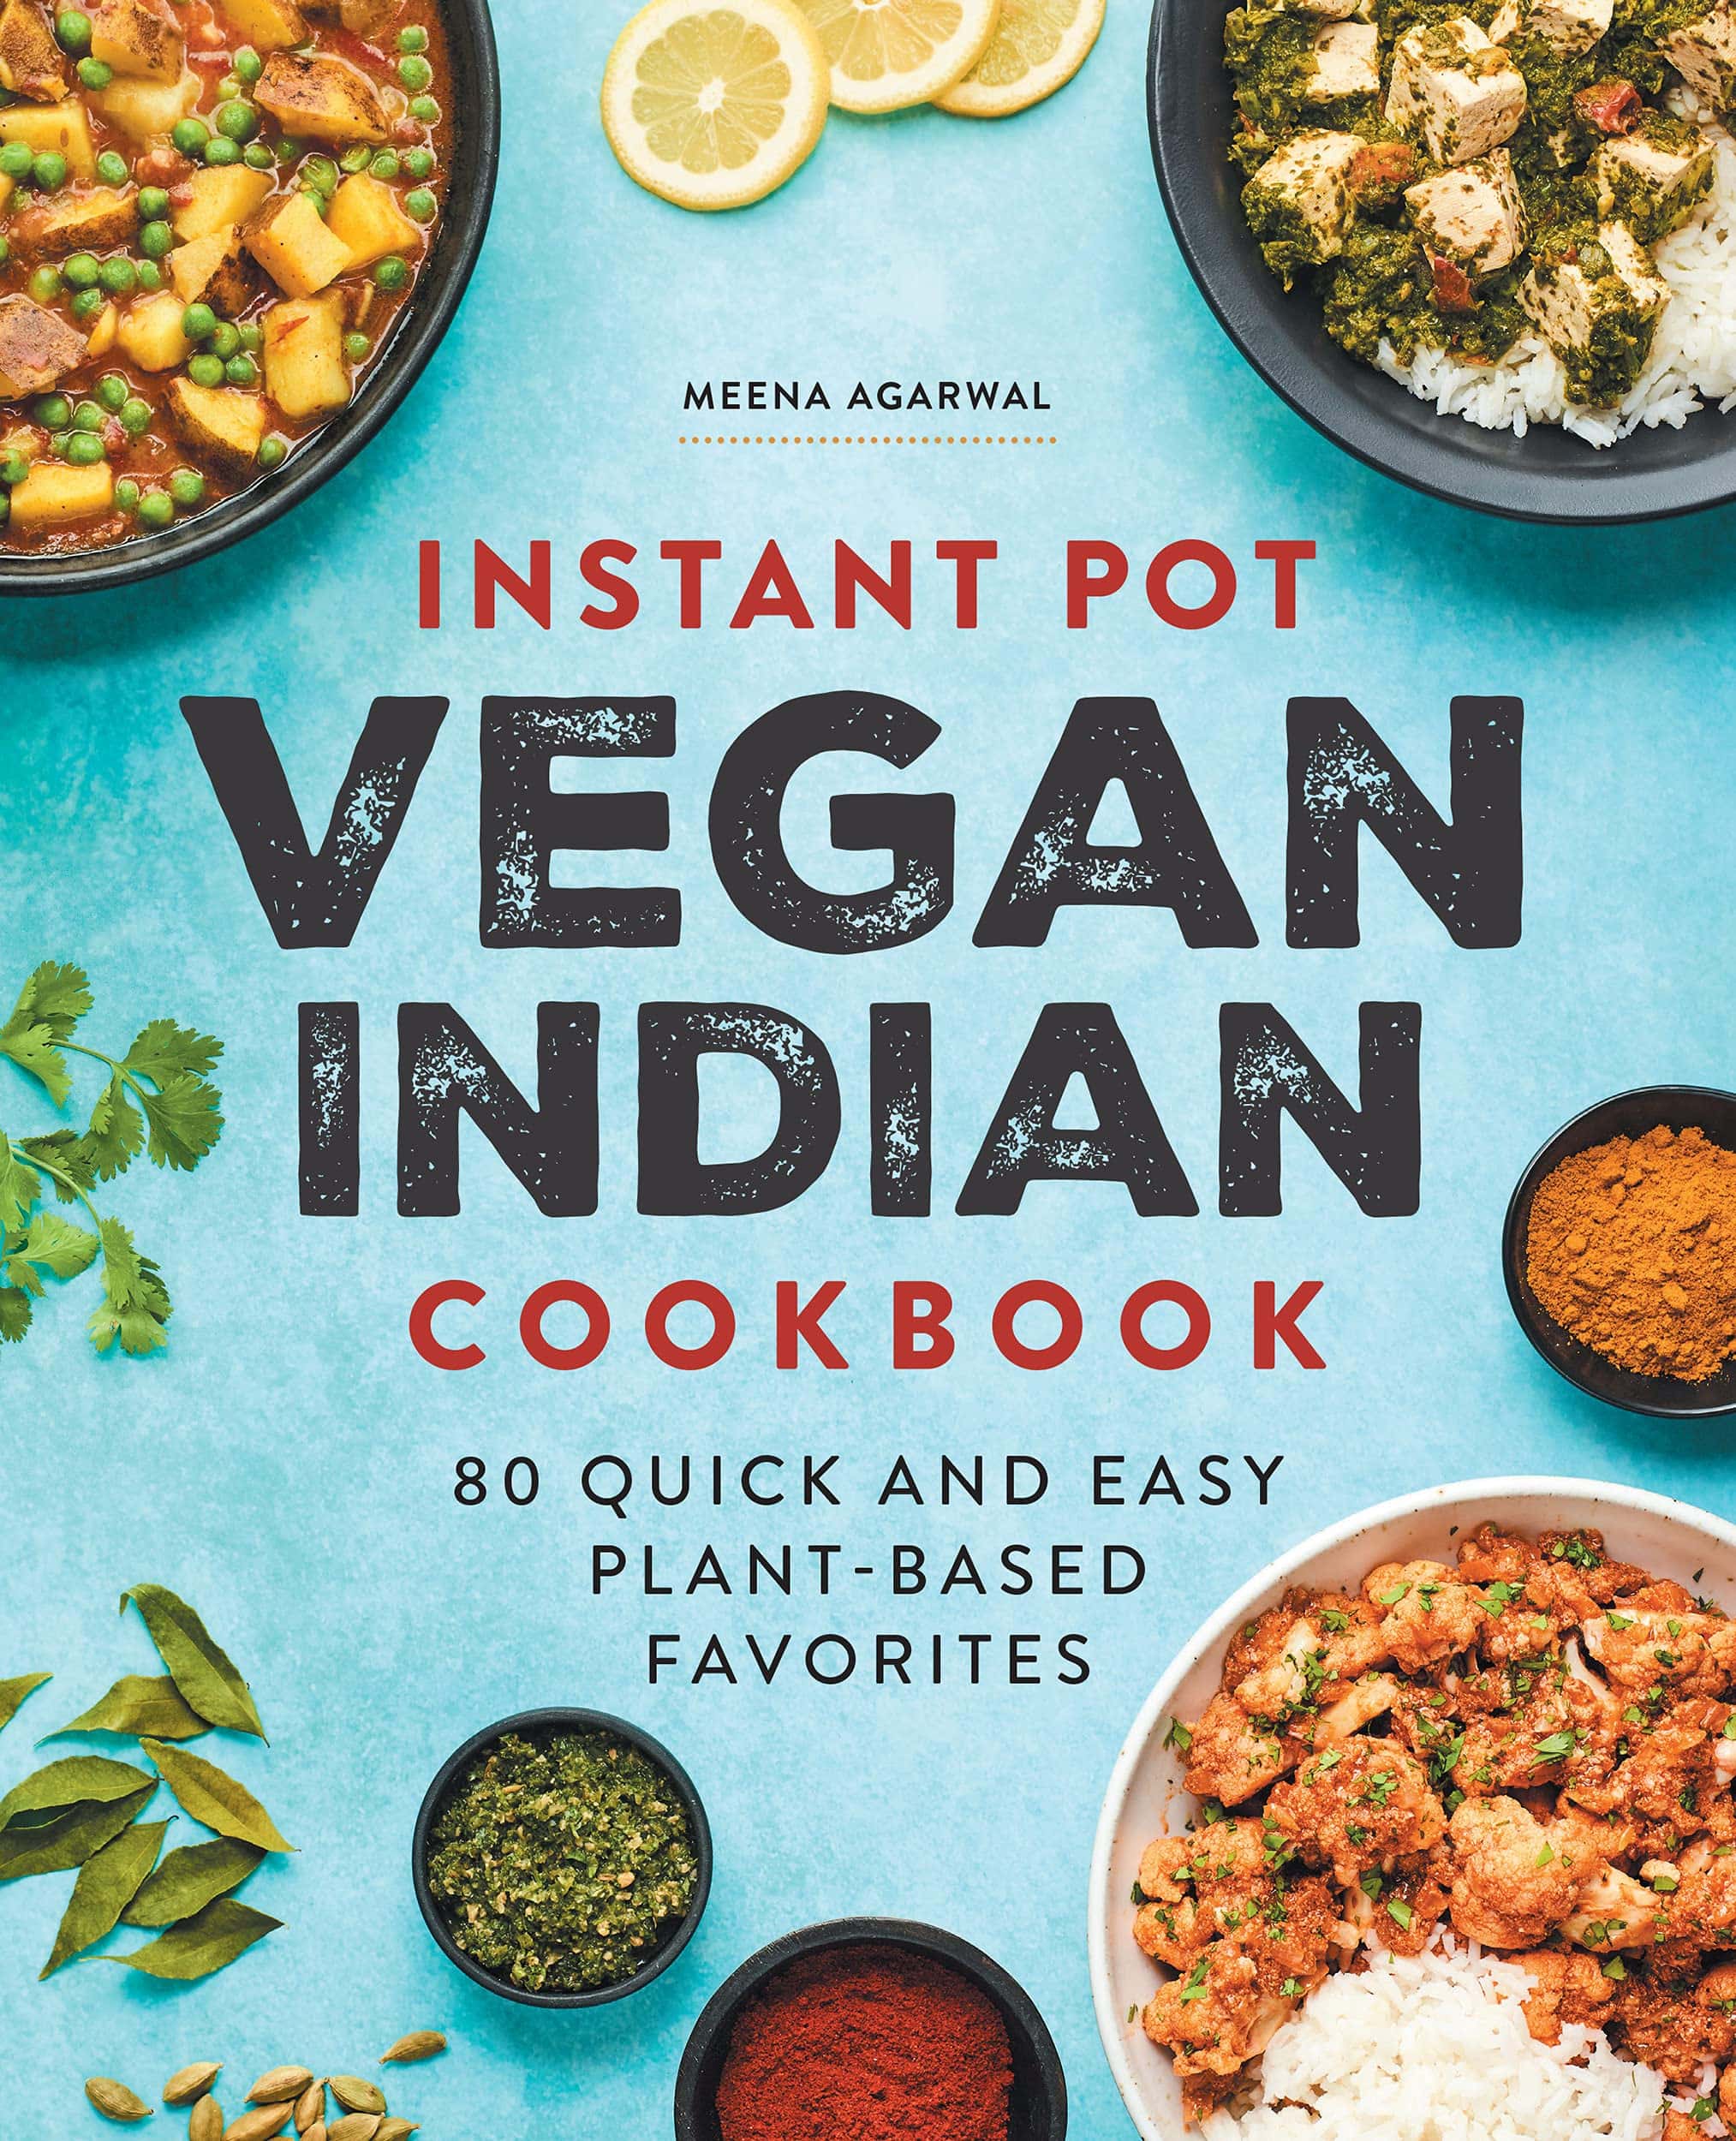 Instant Pot Vegan Indian Cooking by Meena Agarwal